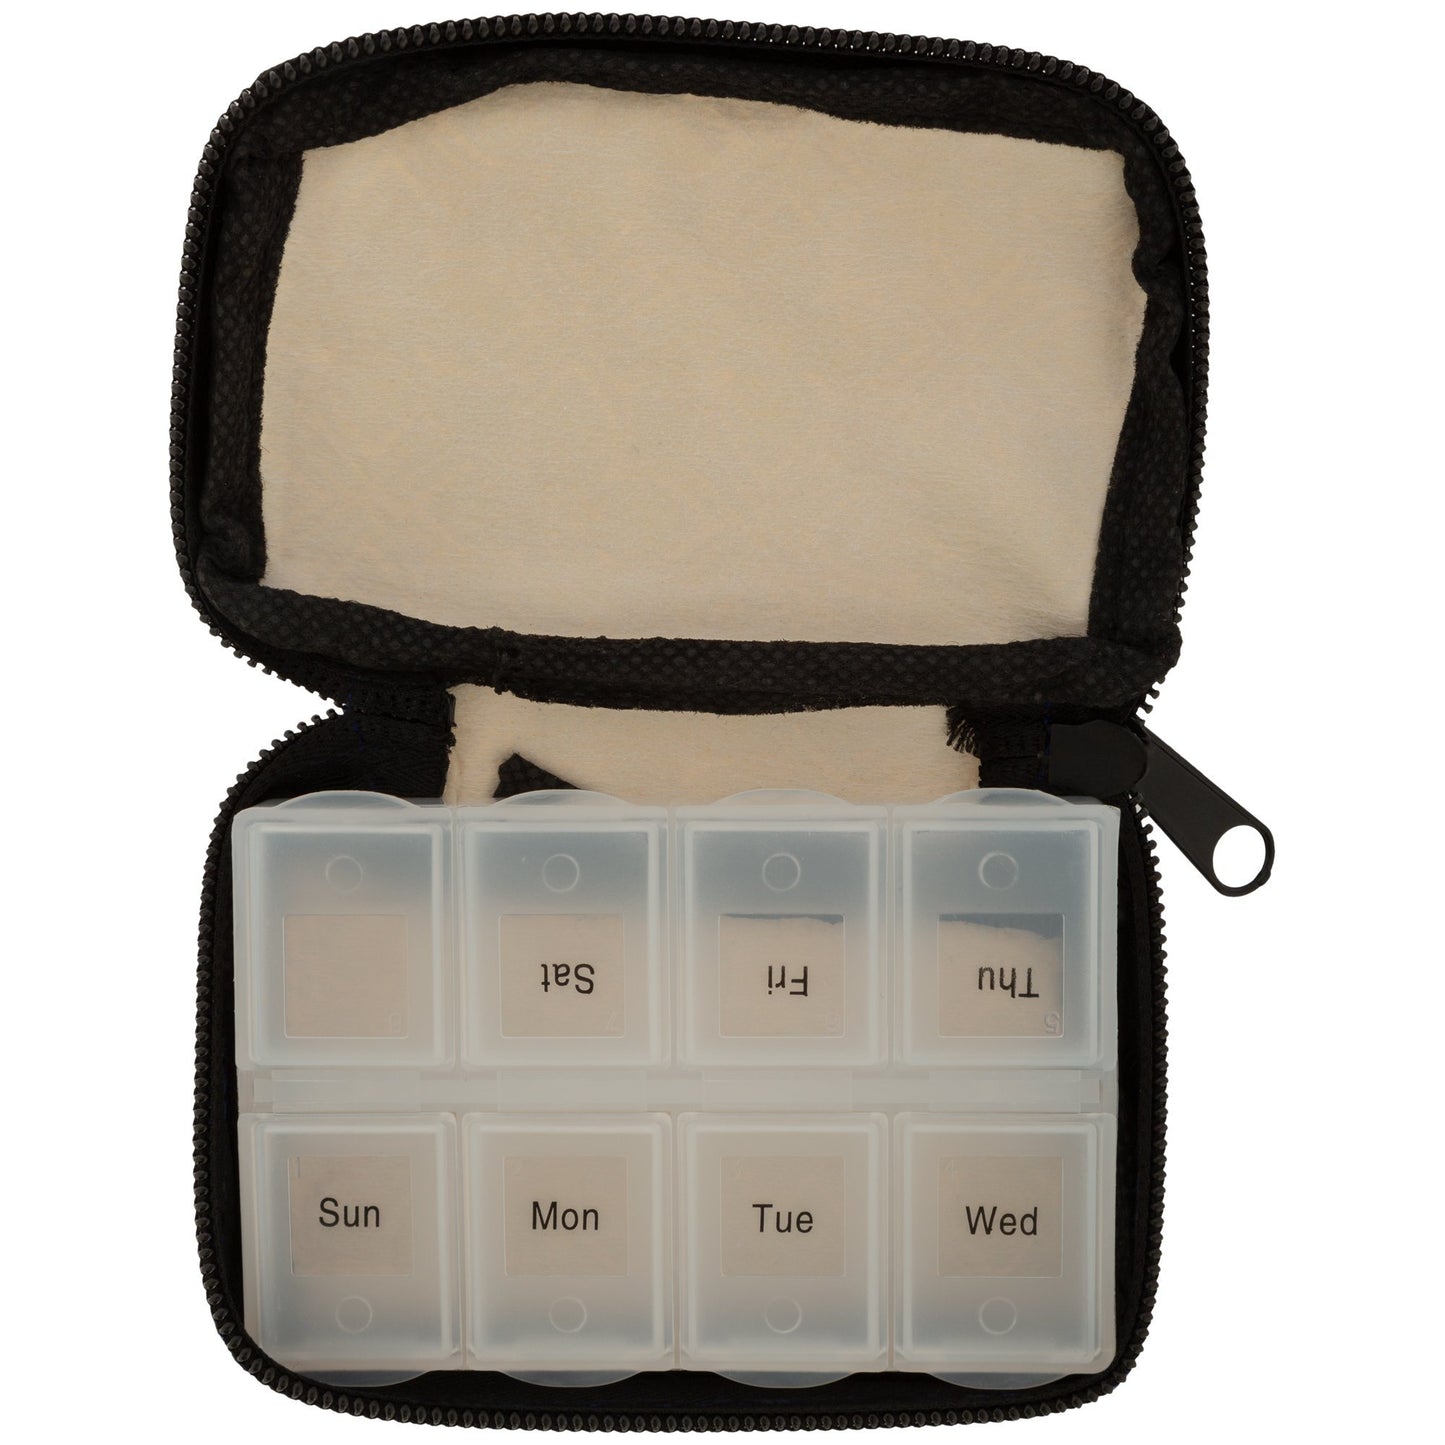 Promo - PROMO - Fresh Paw Deluxe Pill Box